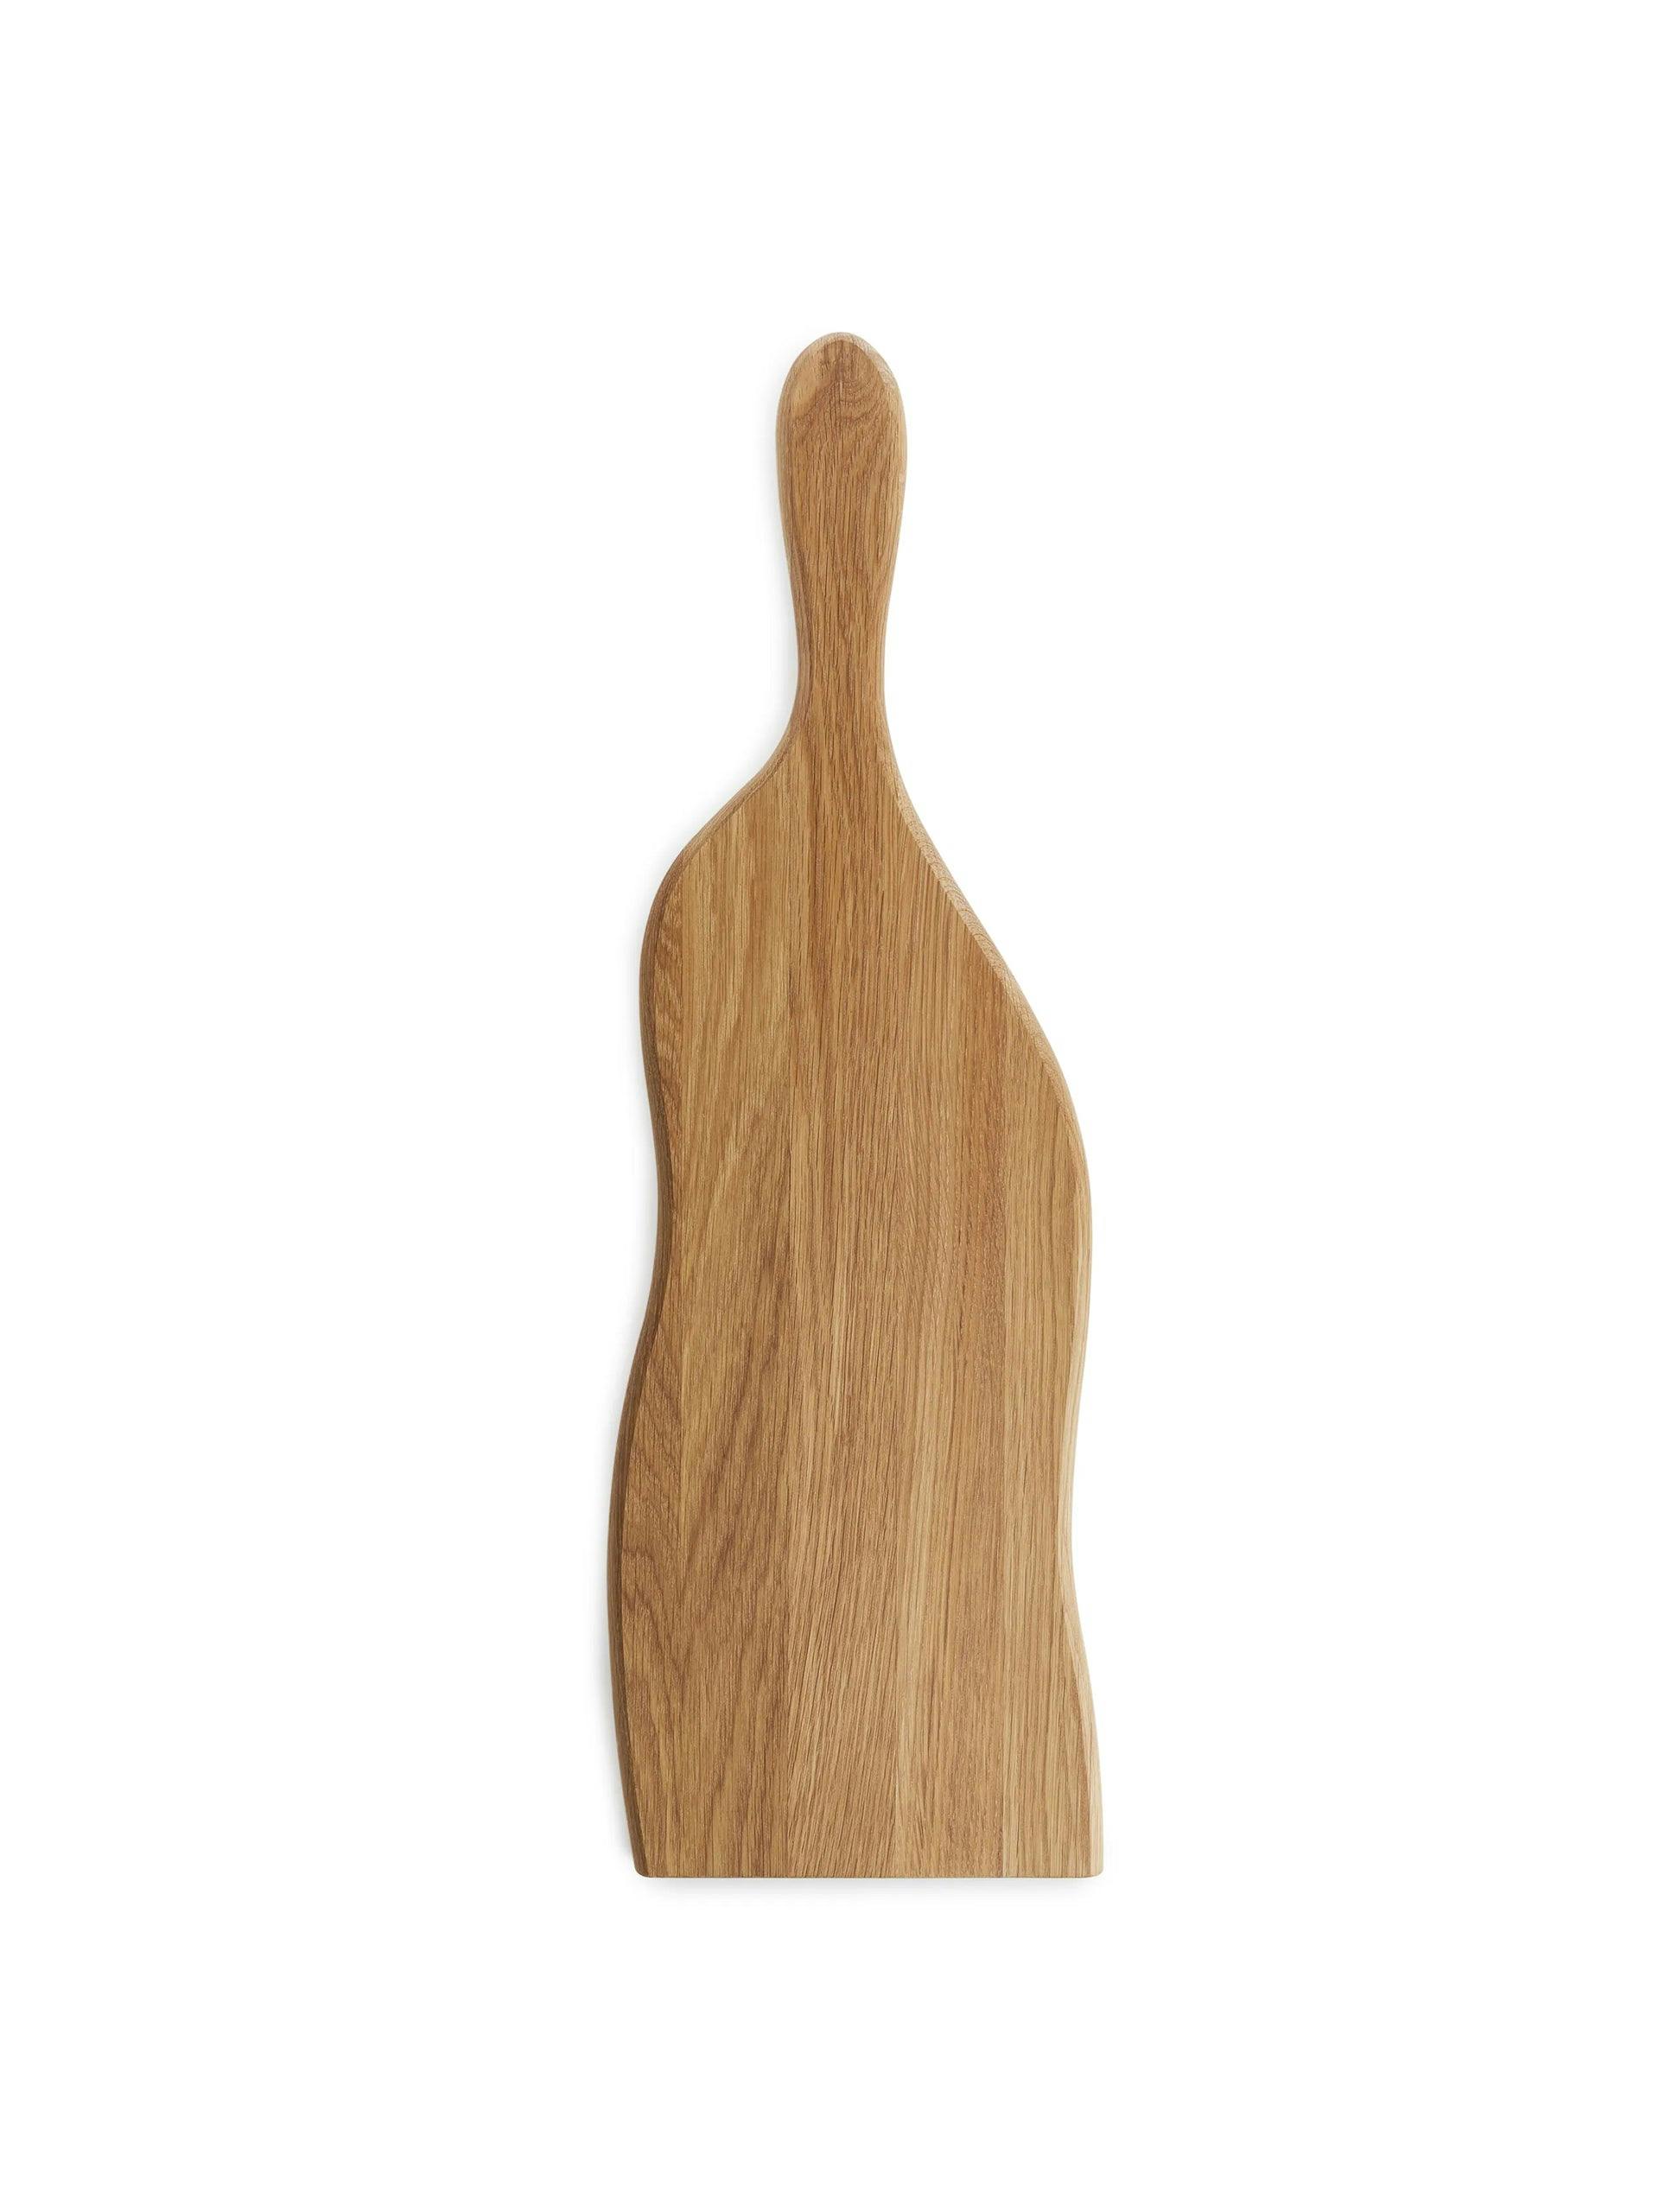 Oak wood cutting board